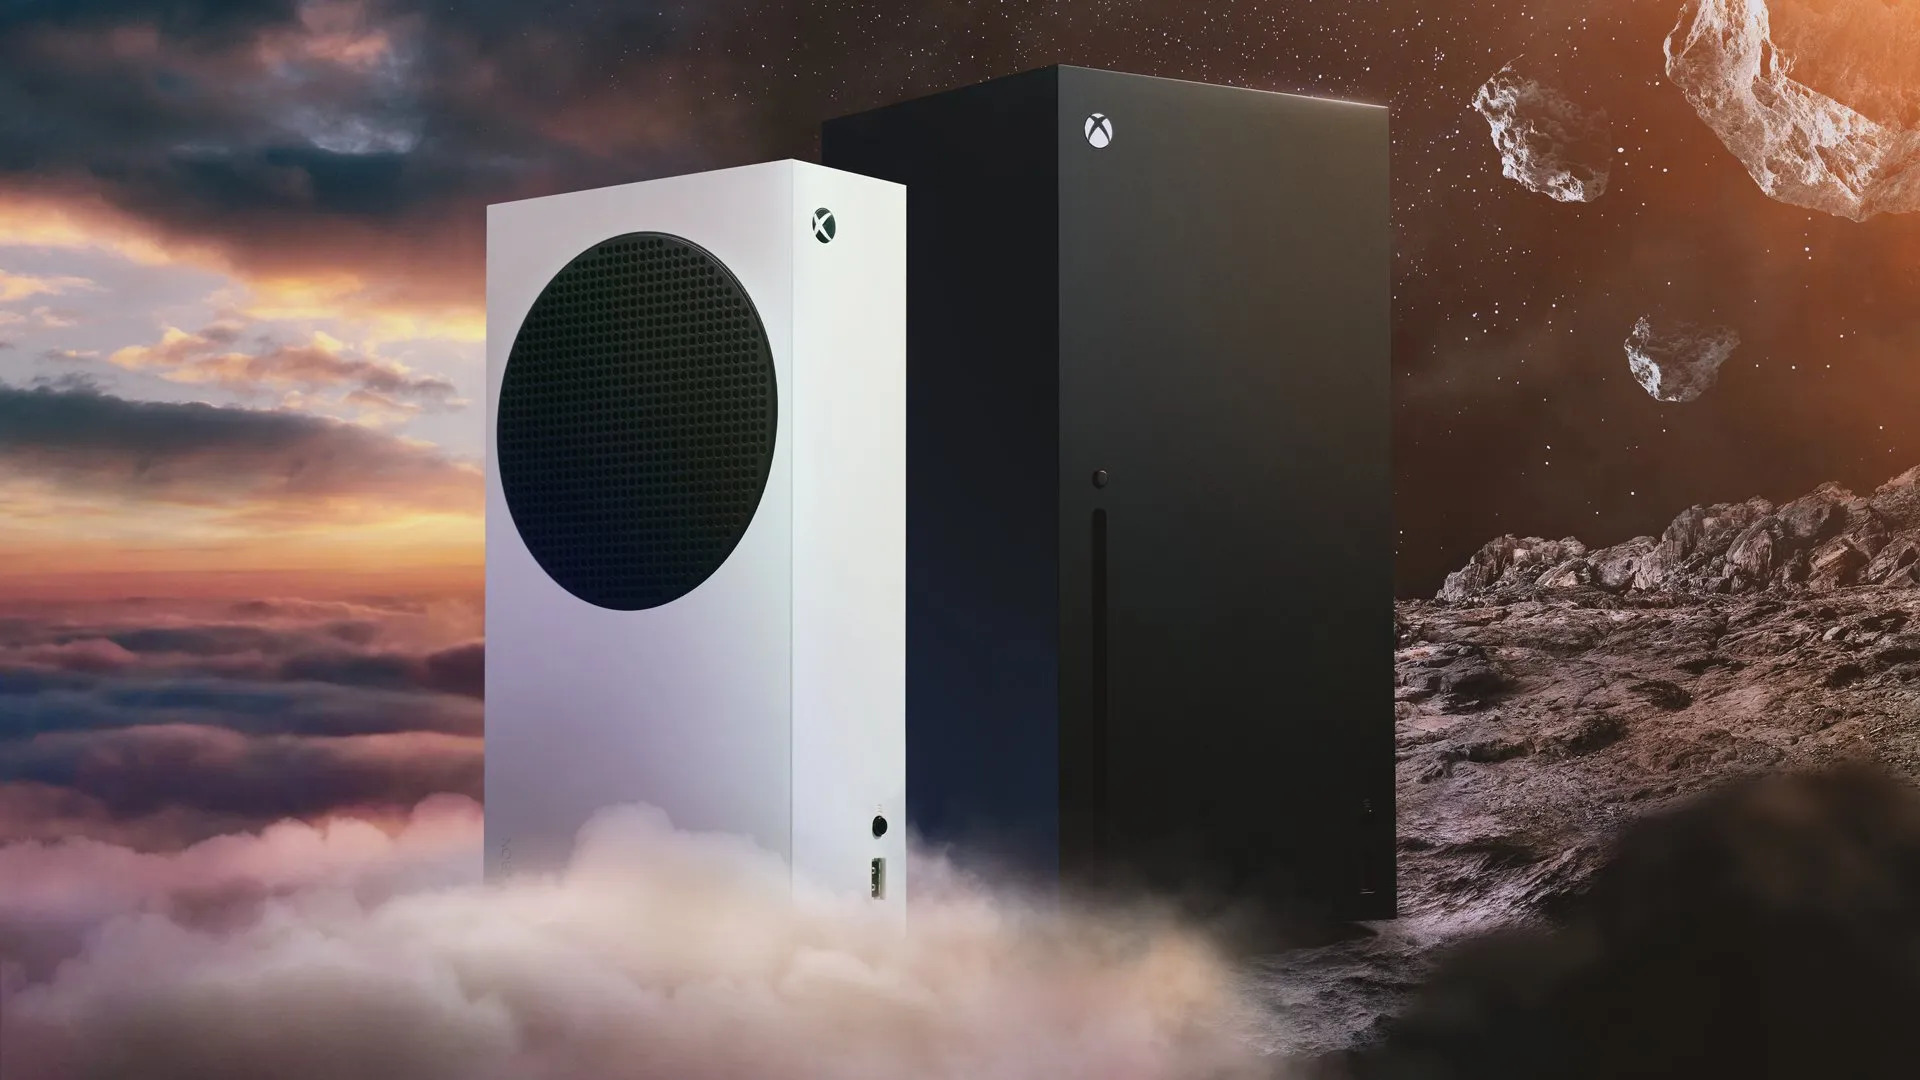 Microsoft's Xbox Series S and X